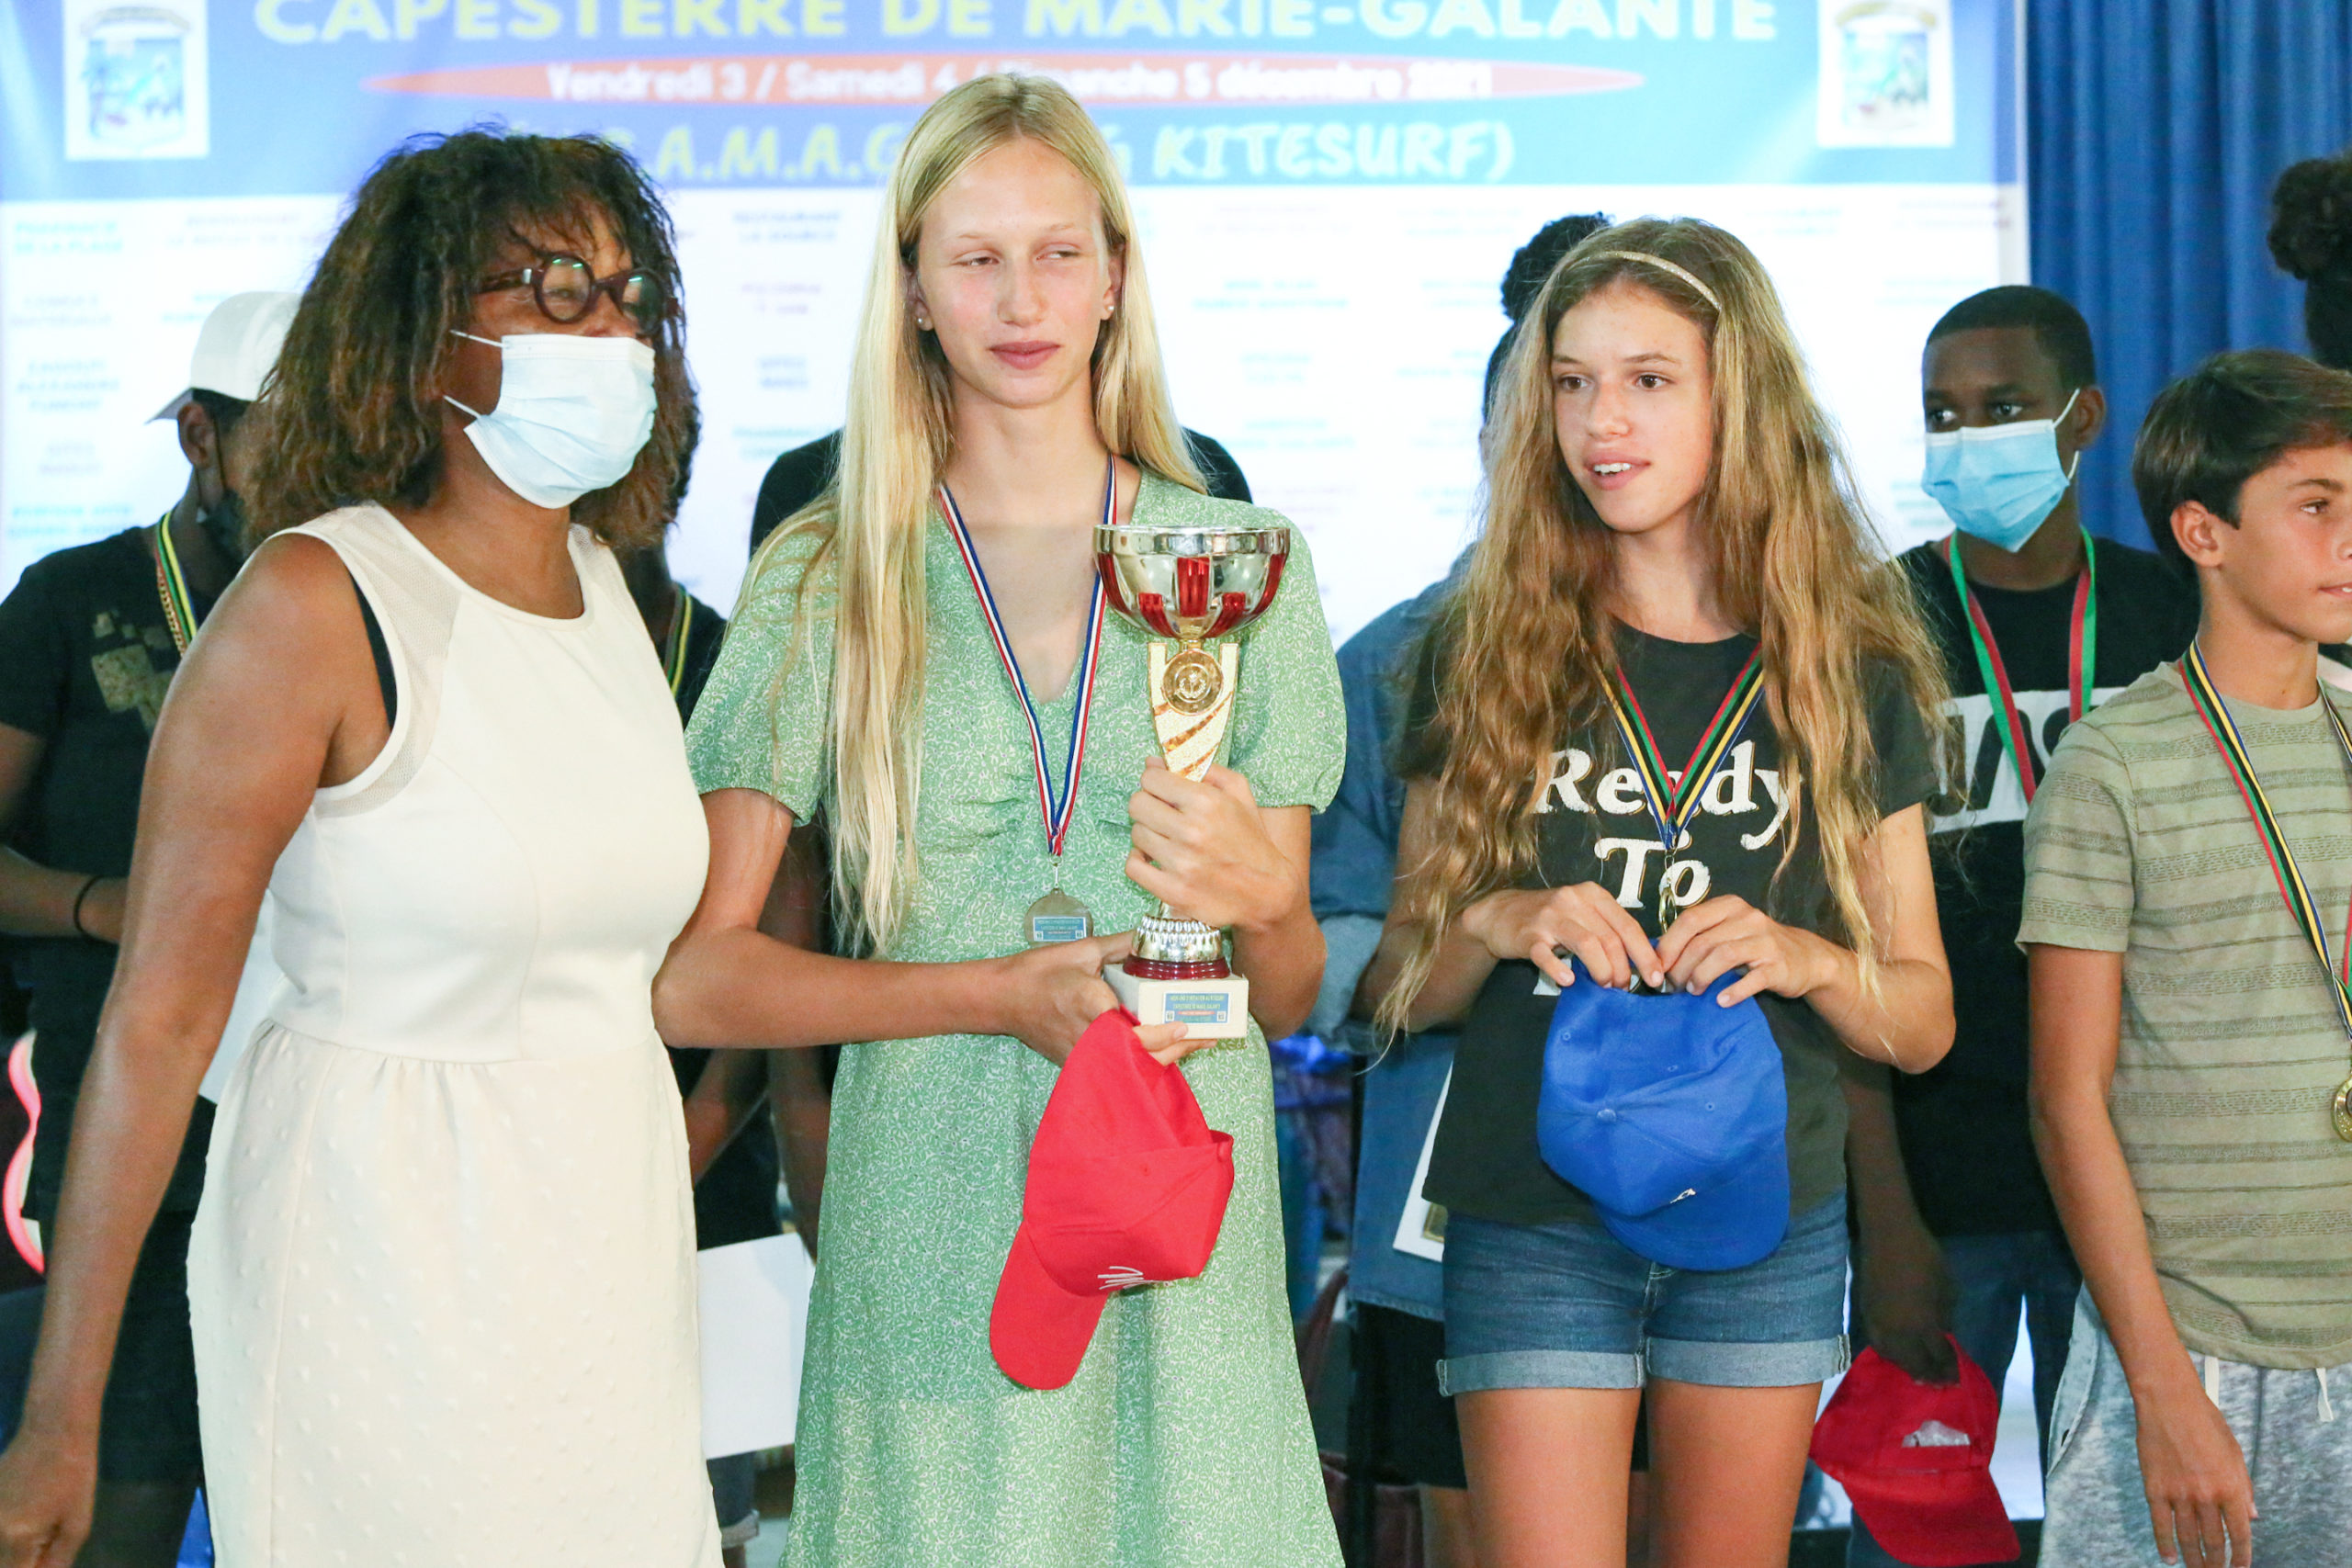 KiteSurf Initiation - Trophy Award 2021 - DN-AFRICA Magazine